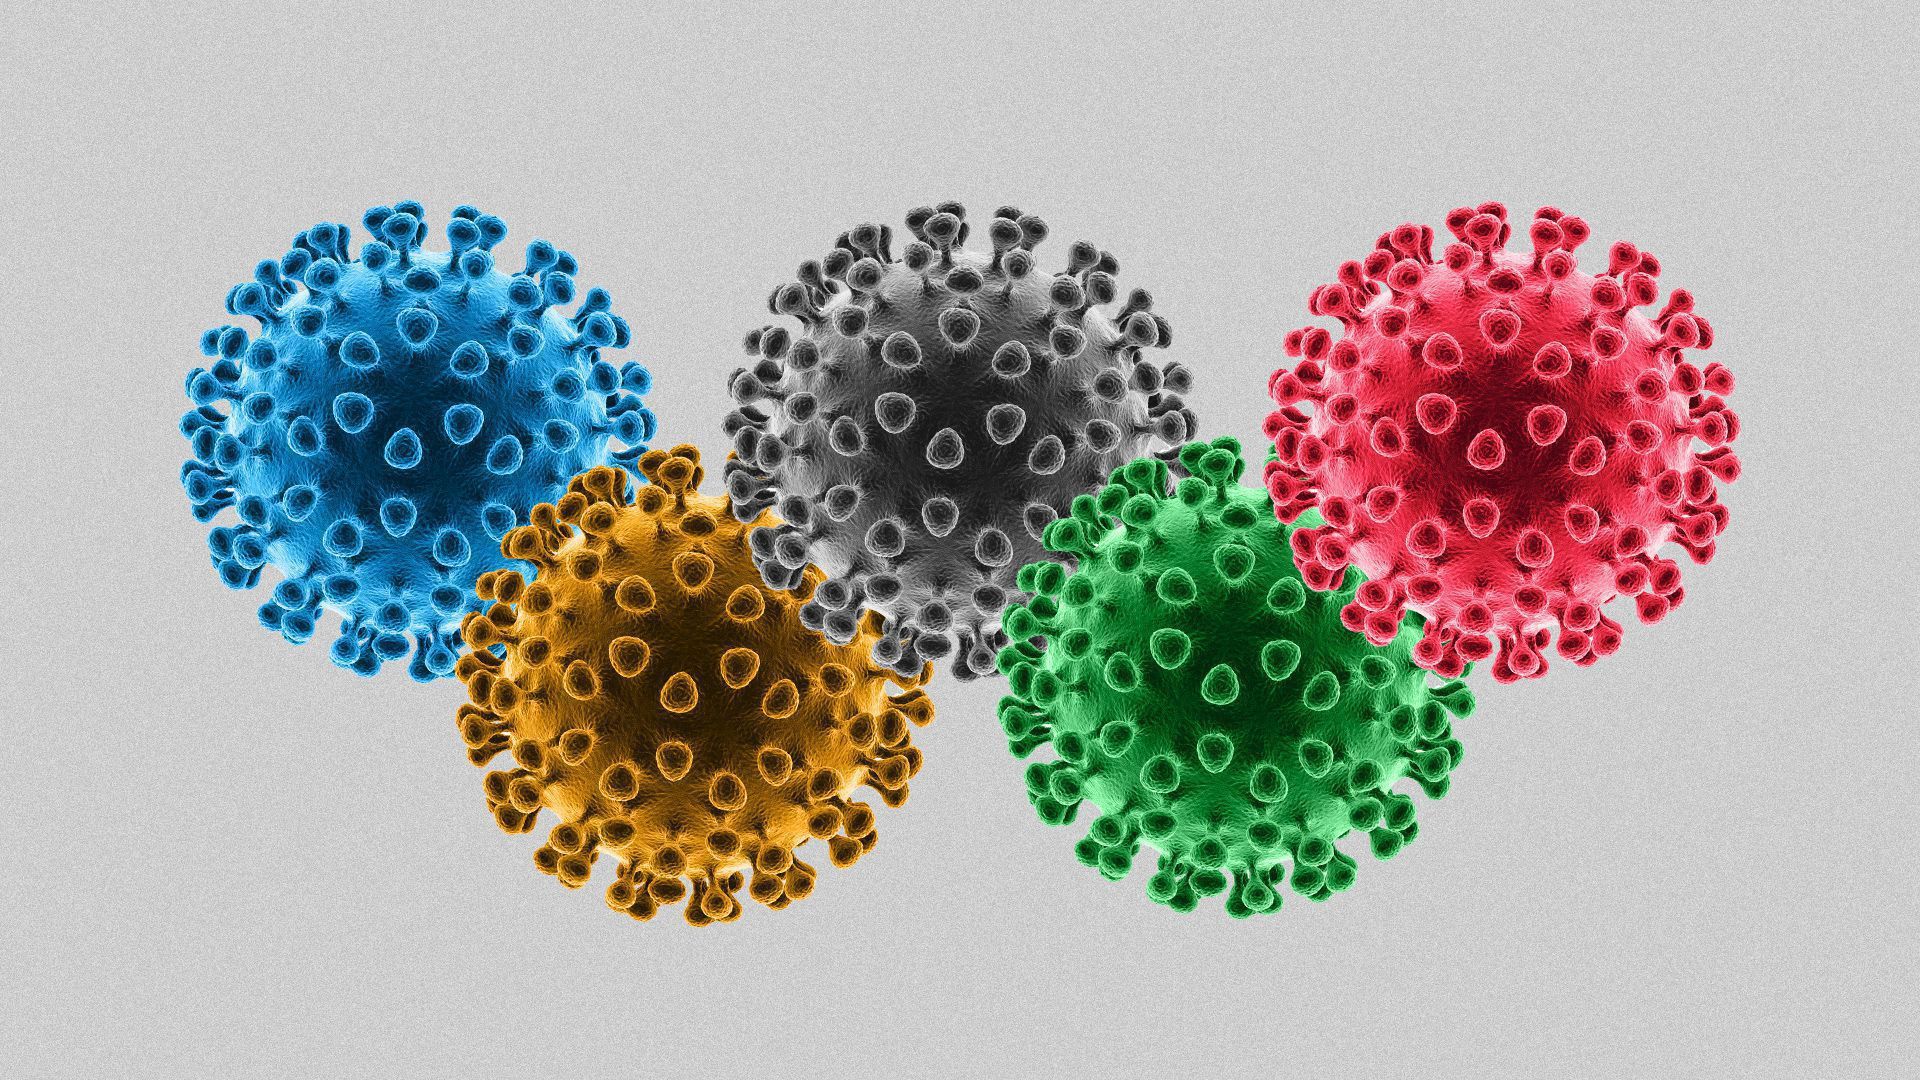 Coronaviruses arranged to look like the Olympic rings.